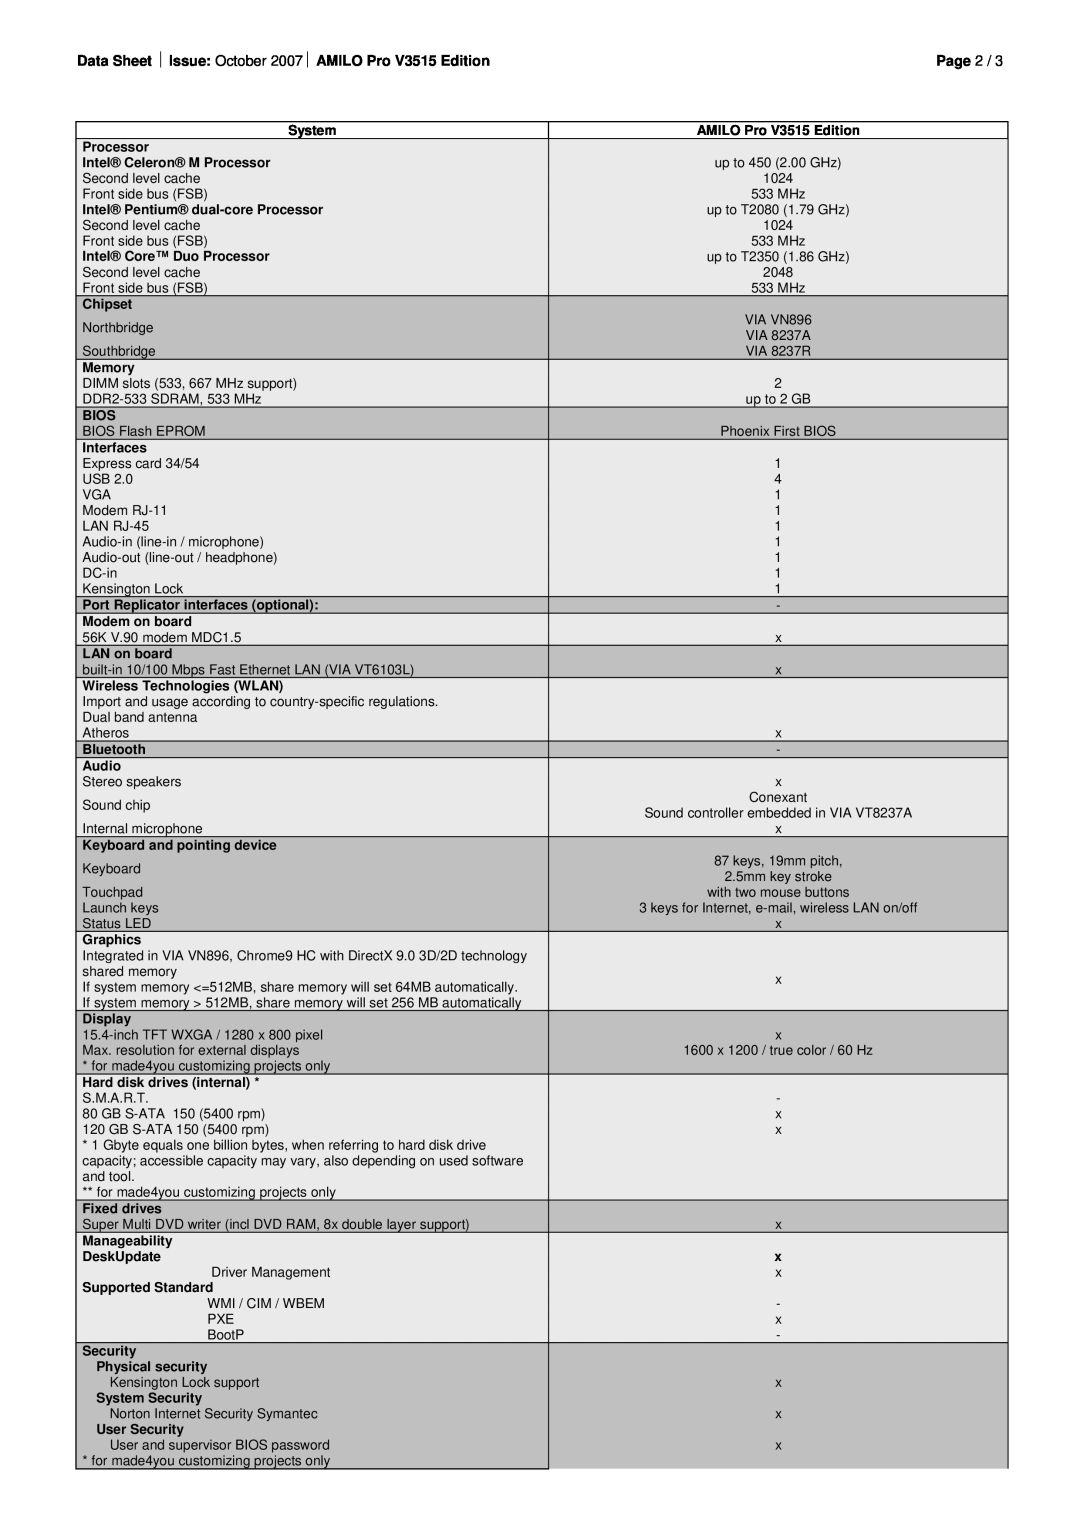 Fujitsu Siemens Computers manual Data Sheet Issue October 2007 AMILO Pro V3515 Edition, Page 